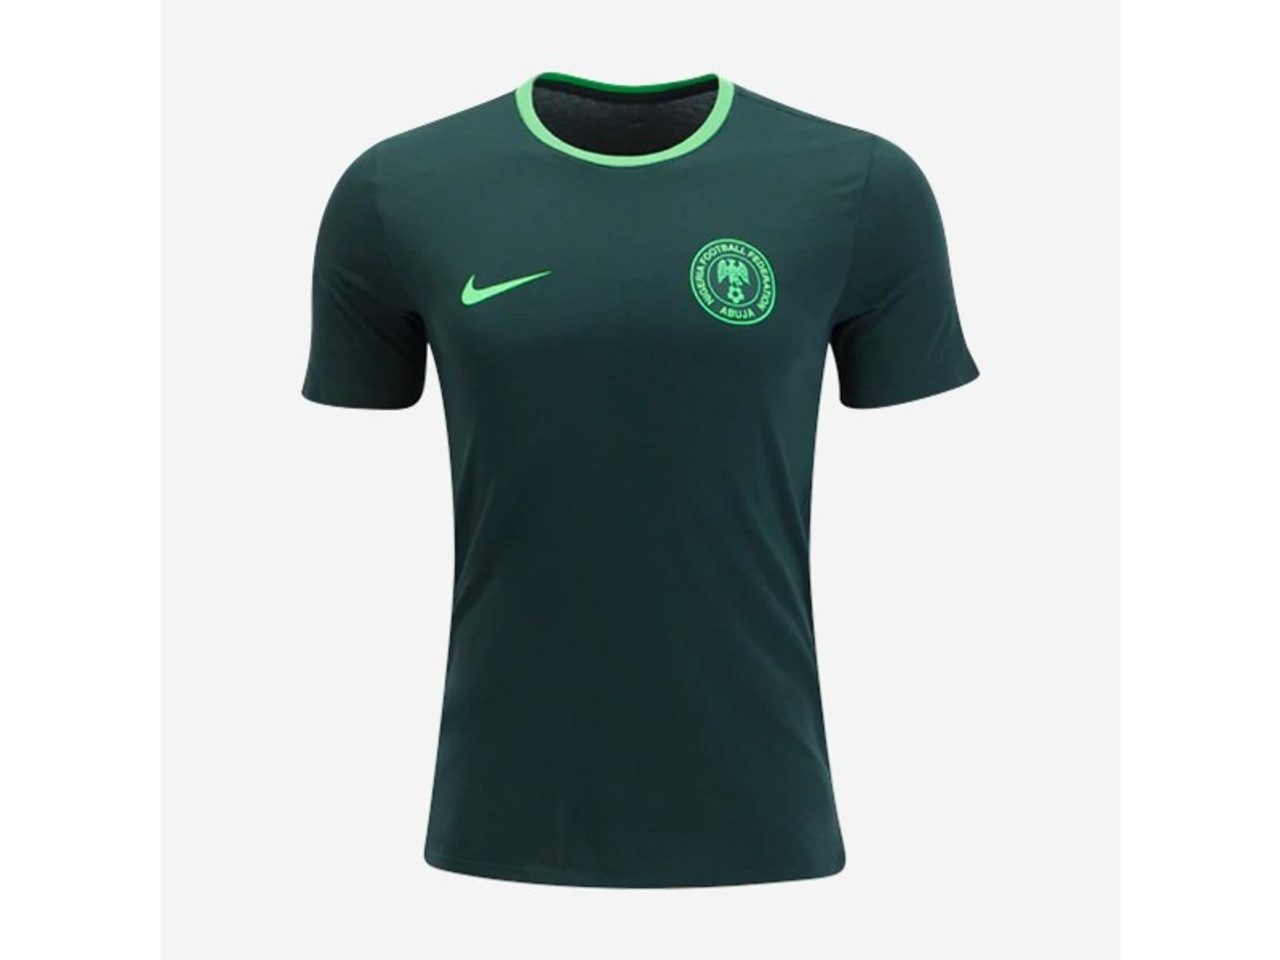 NIKE NIGERIA 2018 CREST T-SHIRT GREEN - Soccer